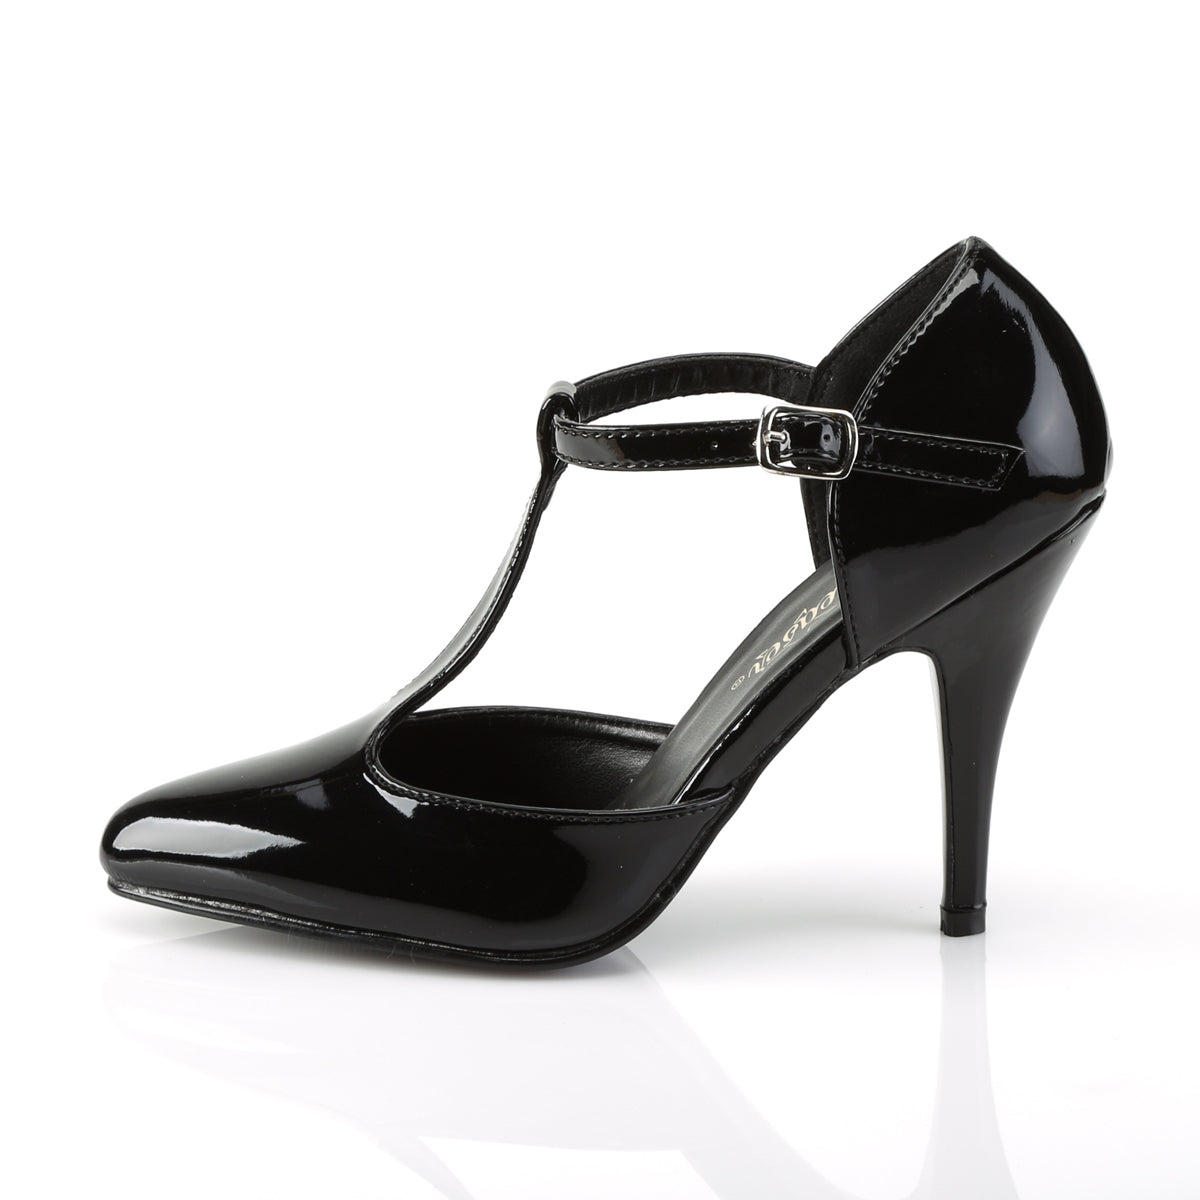 VANITY-415 Pleaser Shoe 4" Heel Black Patent Fetish Footwear-Pleaser- Sexy Shoes Pole Dance Heels